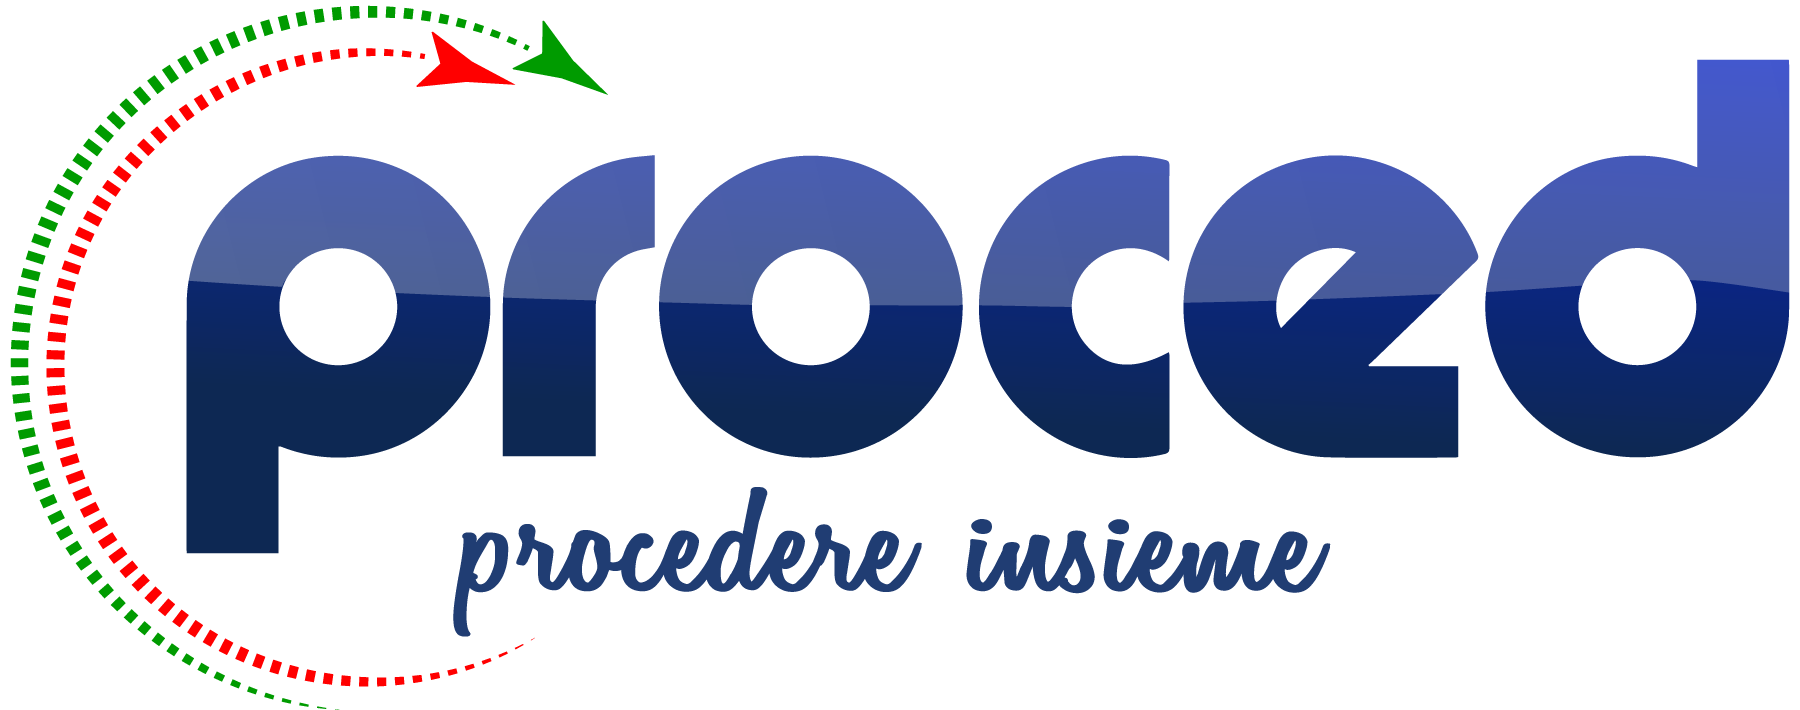 logo_proced_2019